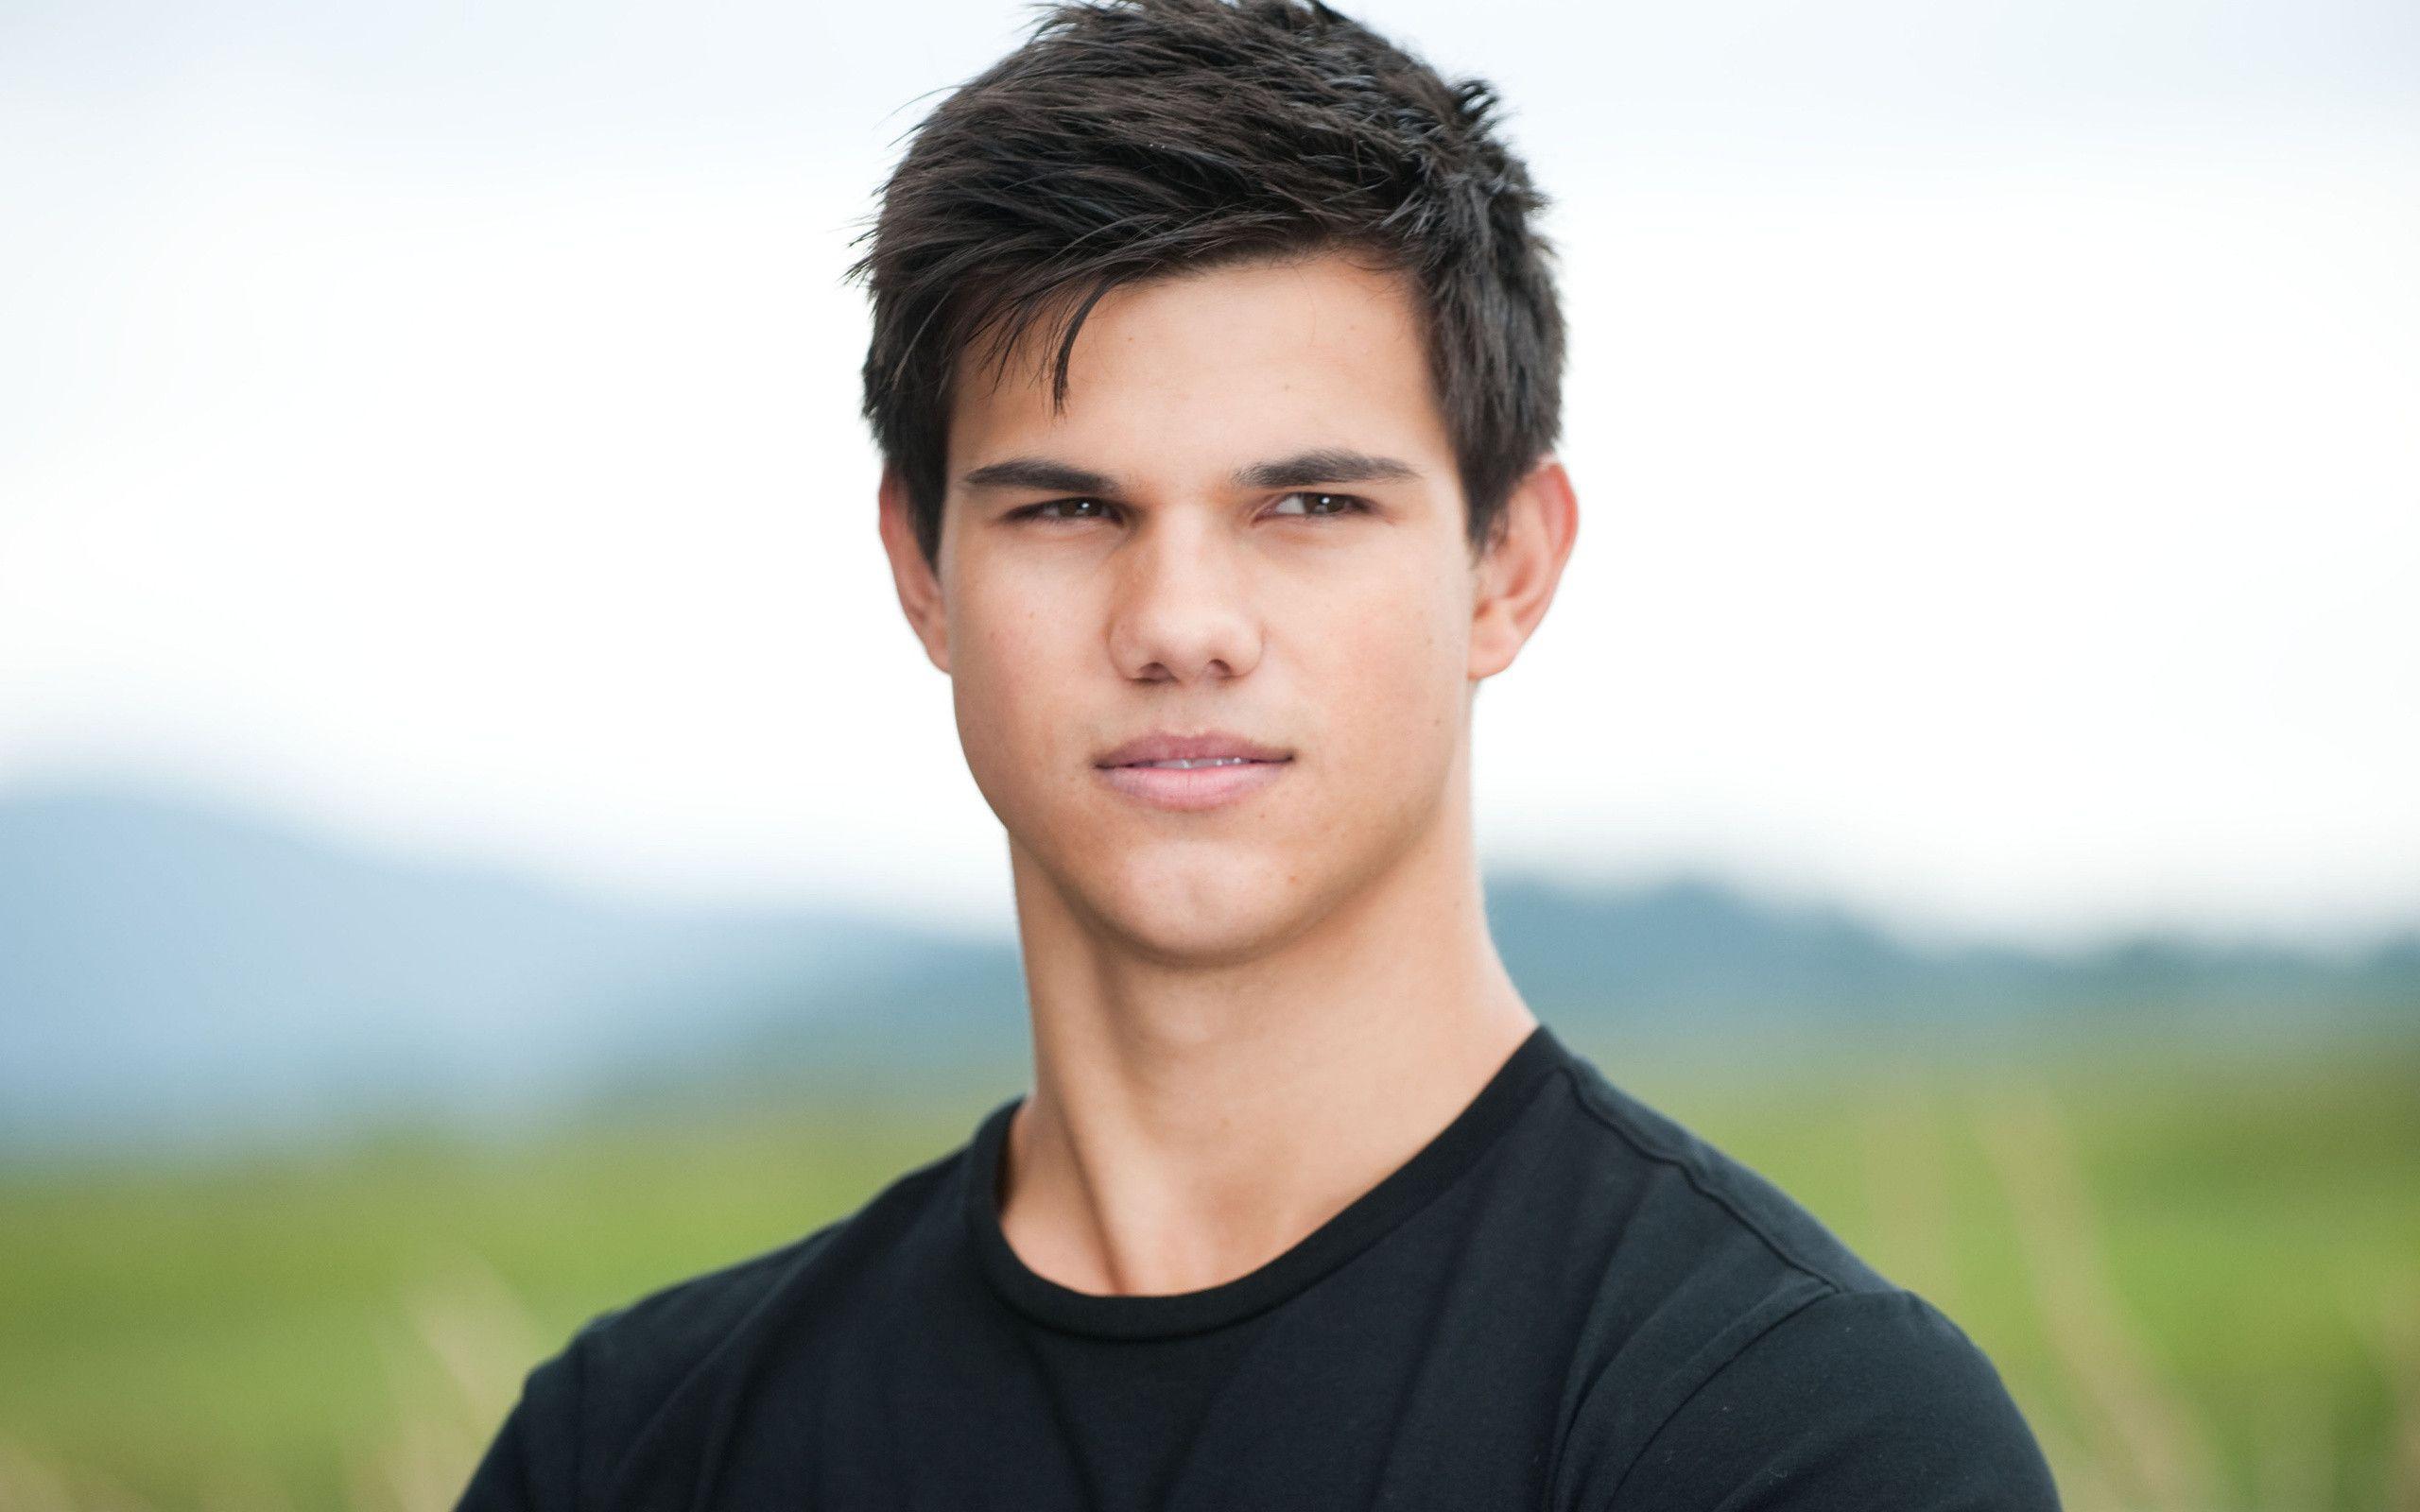 Taylor Lautner Wallpaper, Actor, Model, The Tw Wallpaper